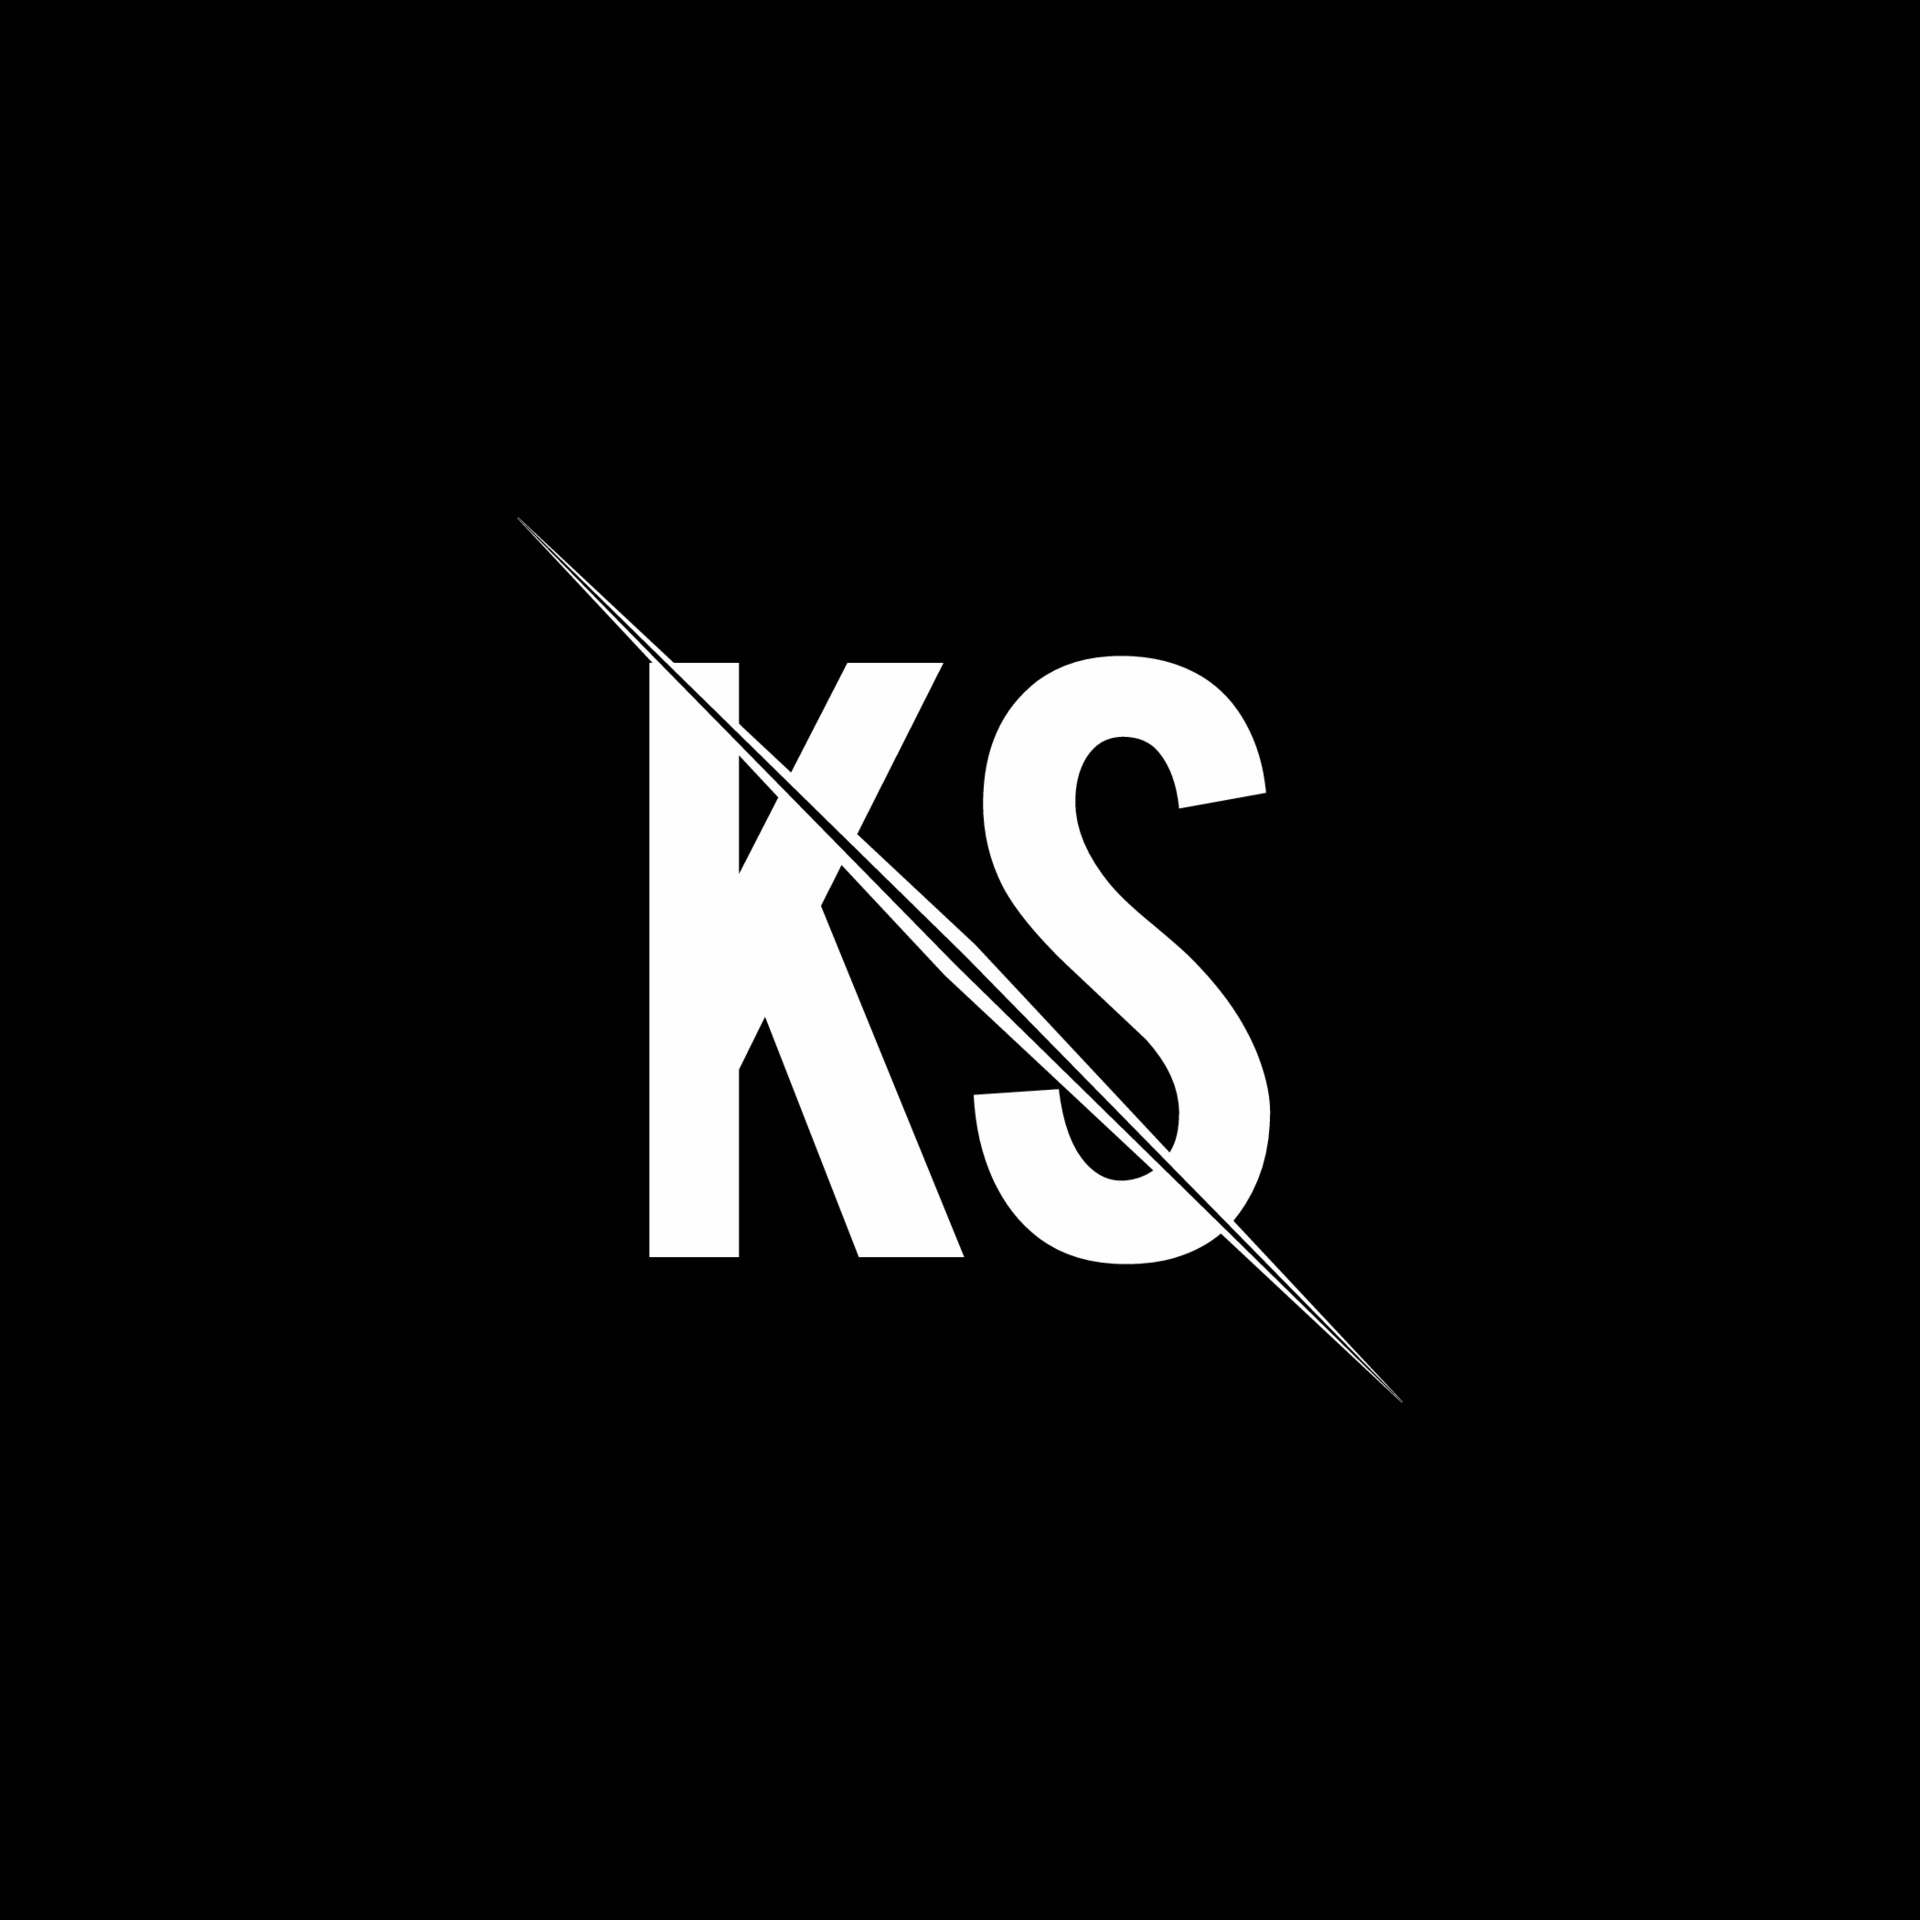 Ks Logo Stock Photos and Images  123RF